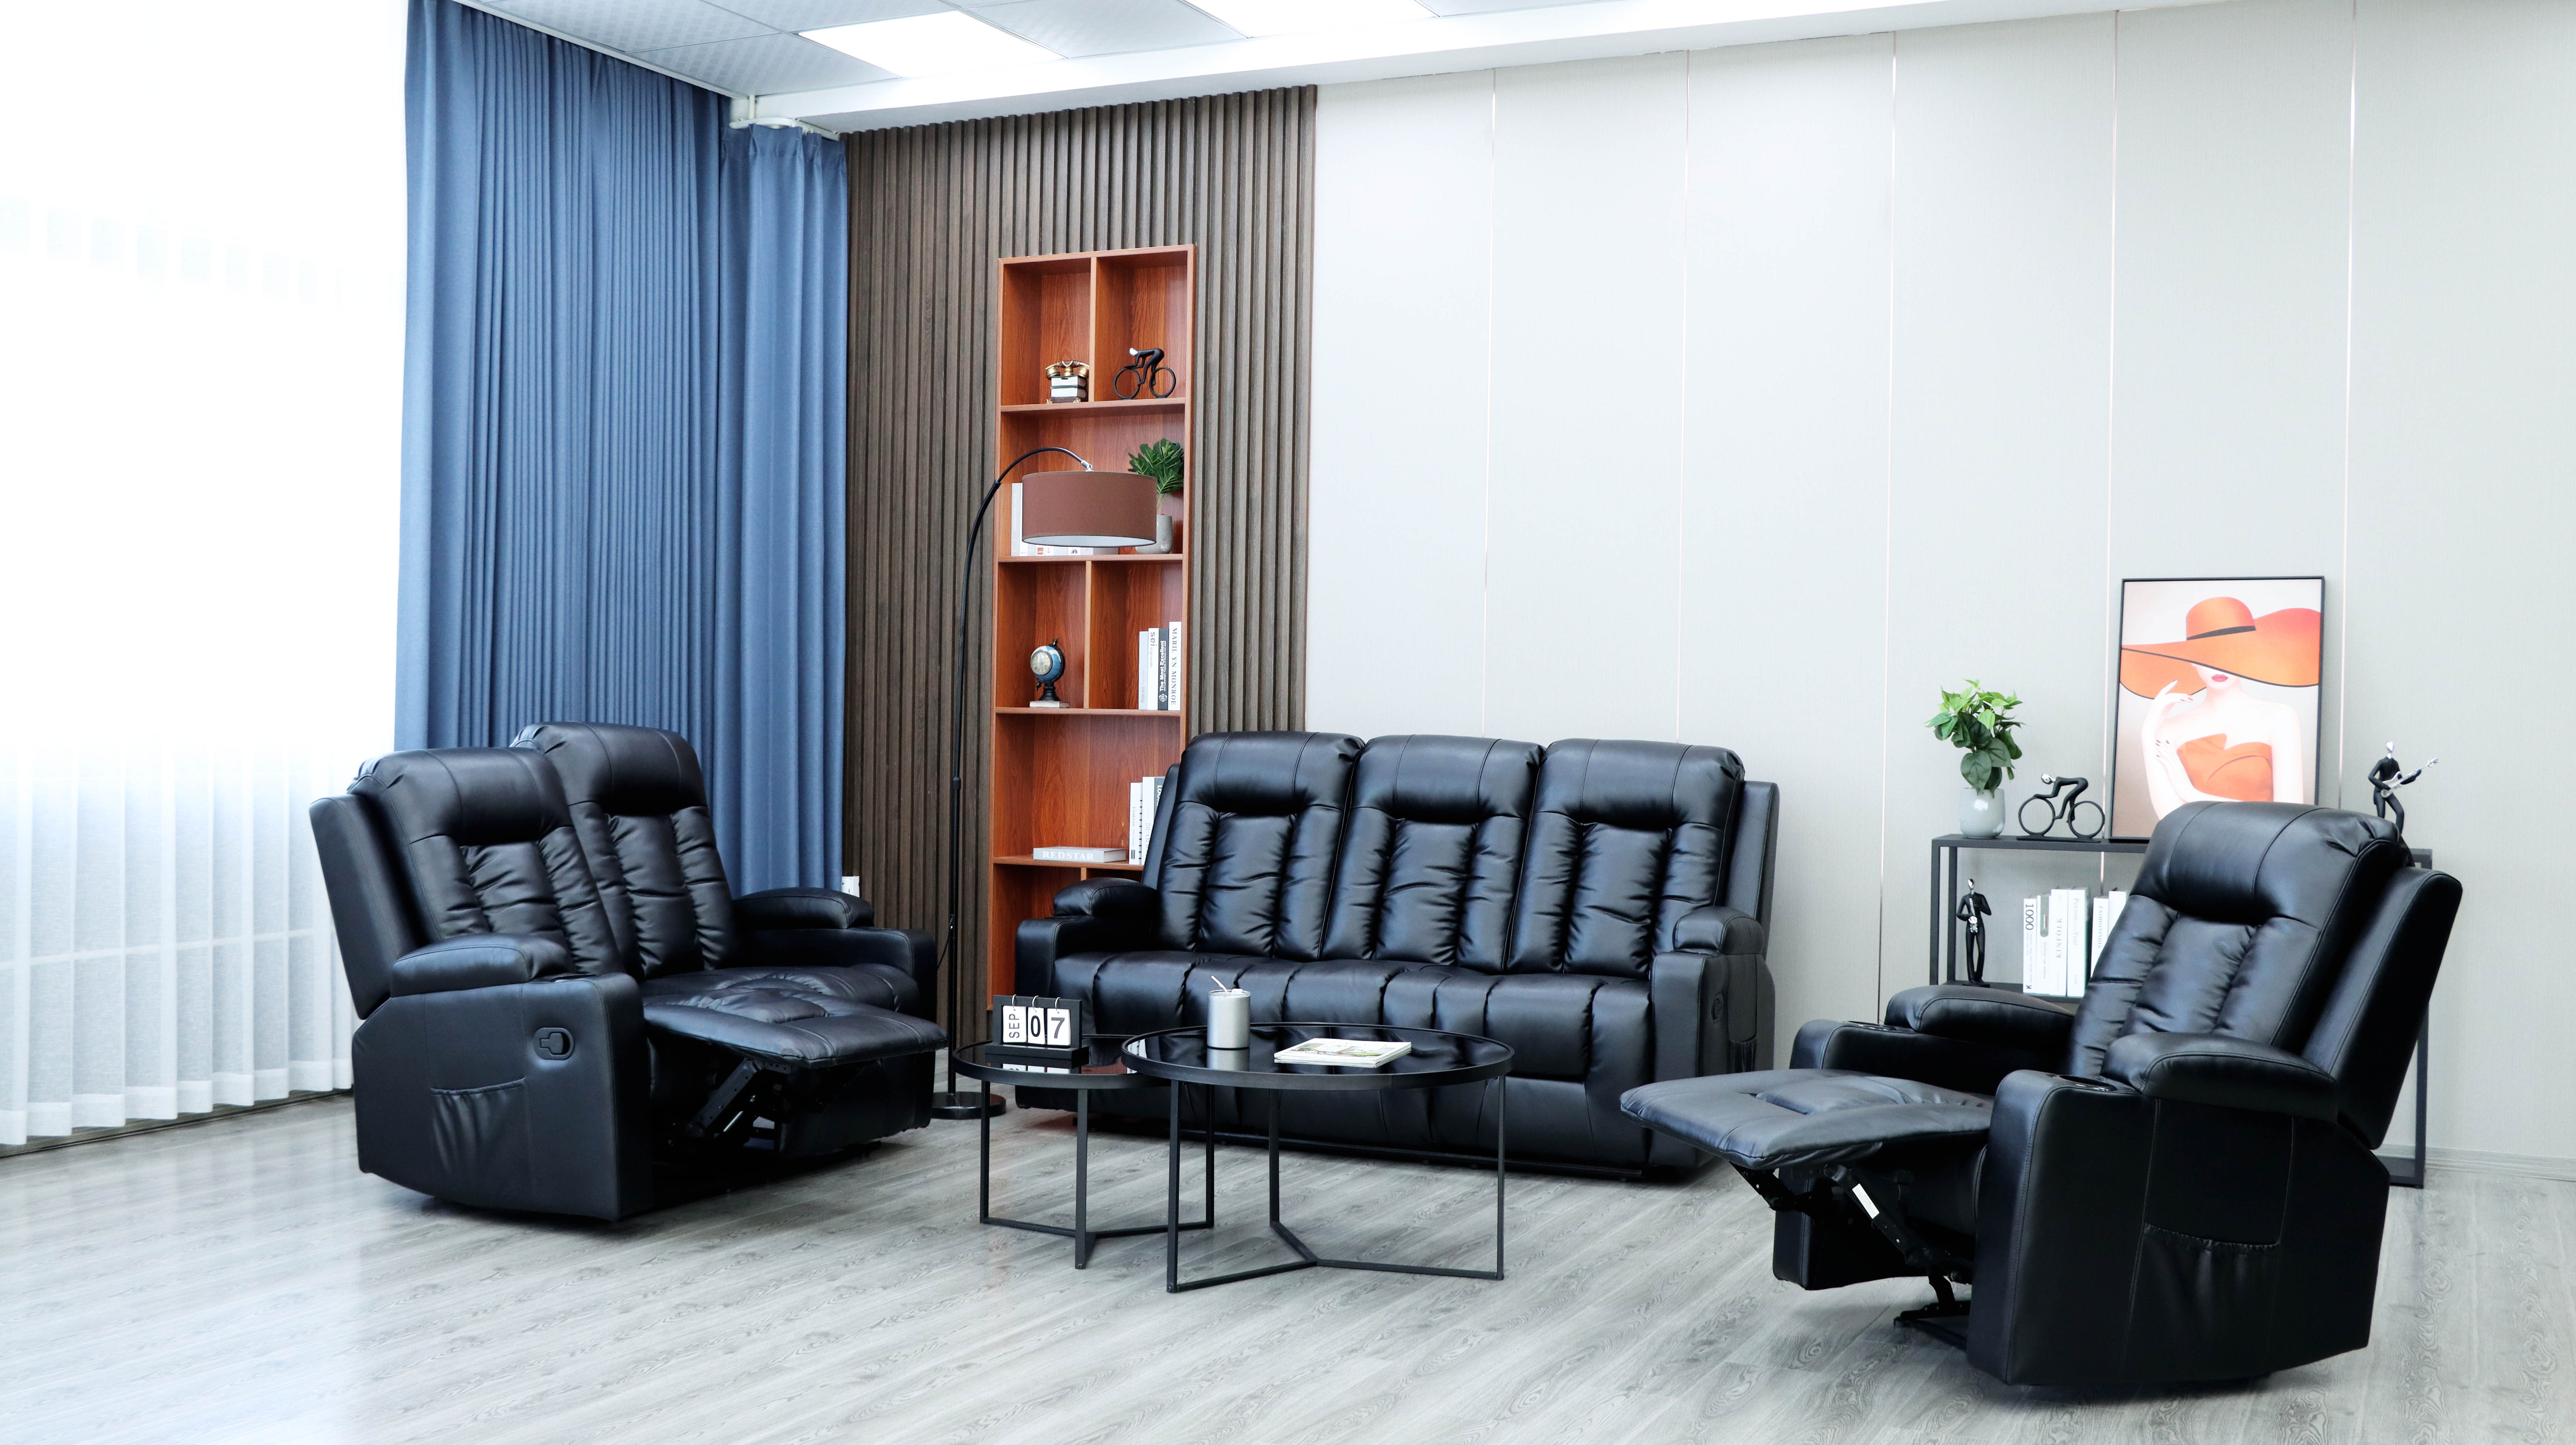 Geeksofa Furniture Living Room Modern PU Leather Recliner Sofa Set 3+2+1